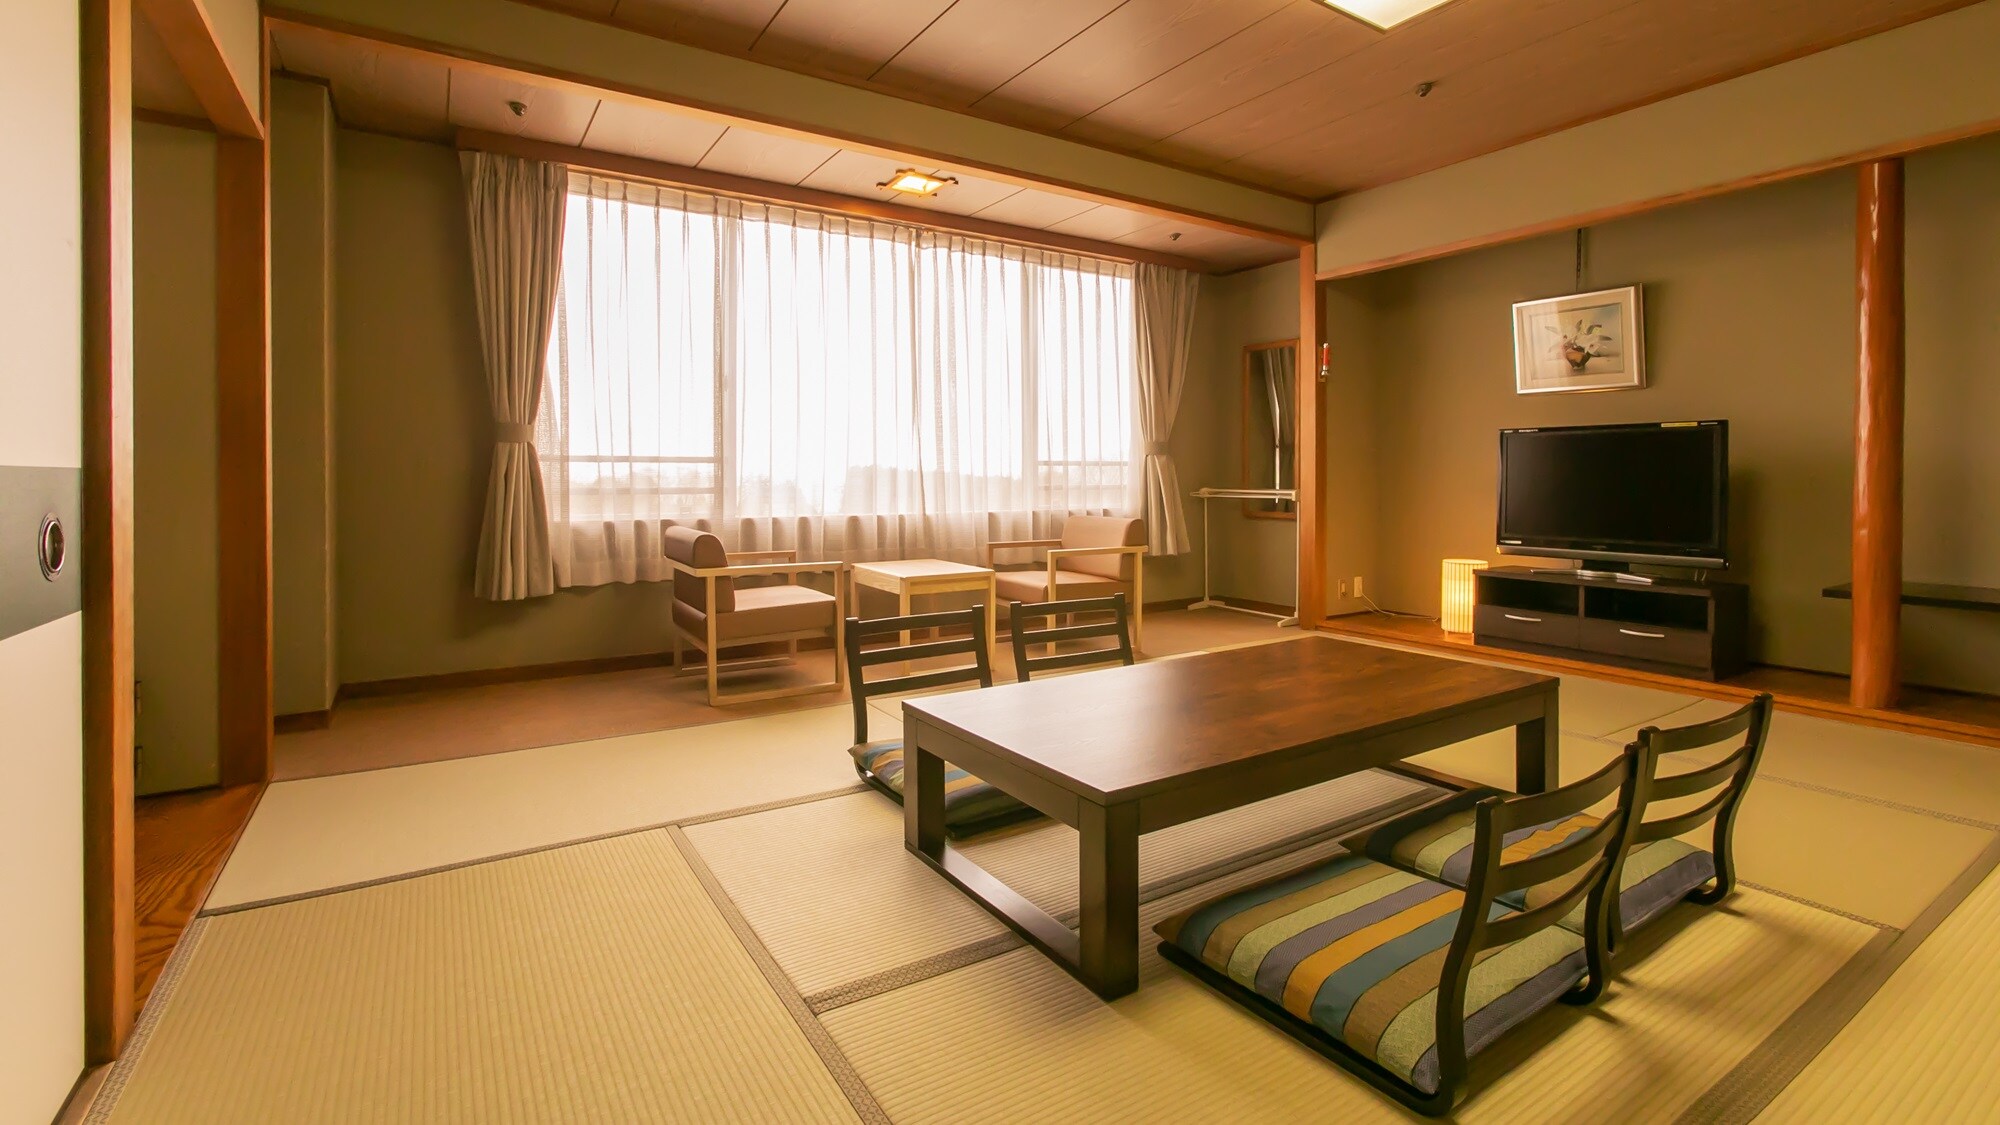 ■ Japanese-style room 10 tatami mats